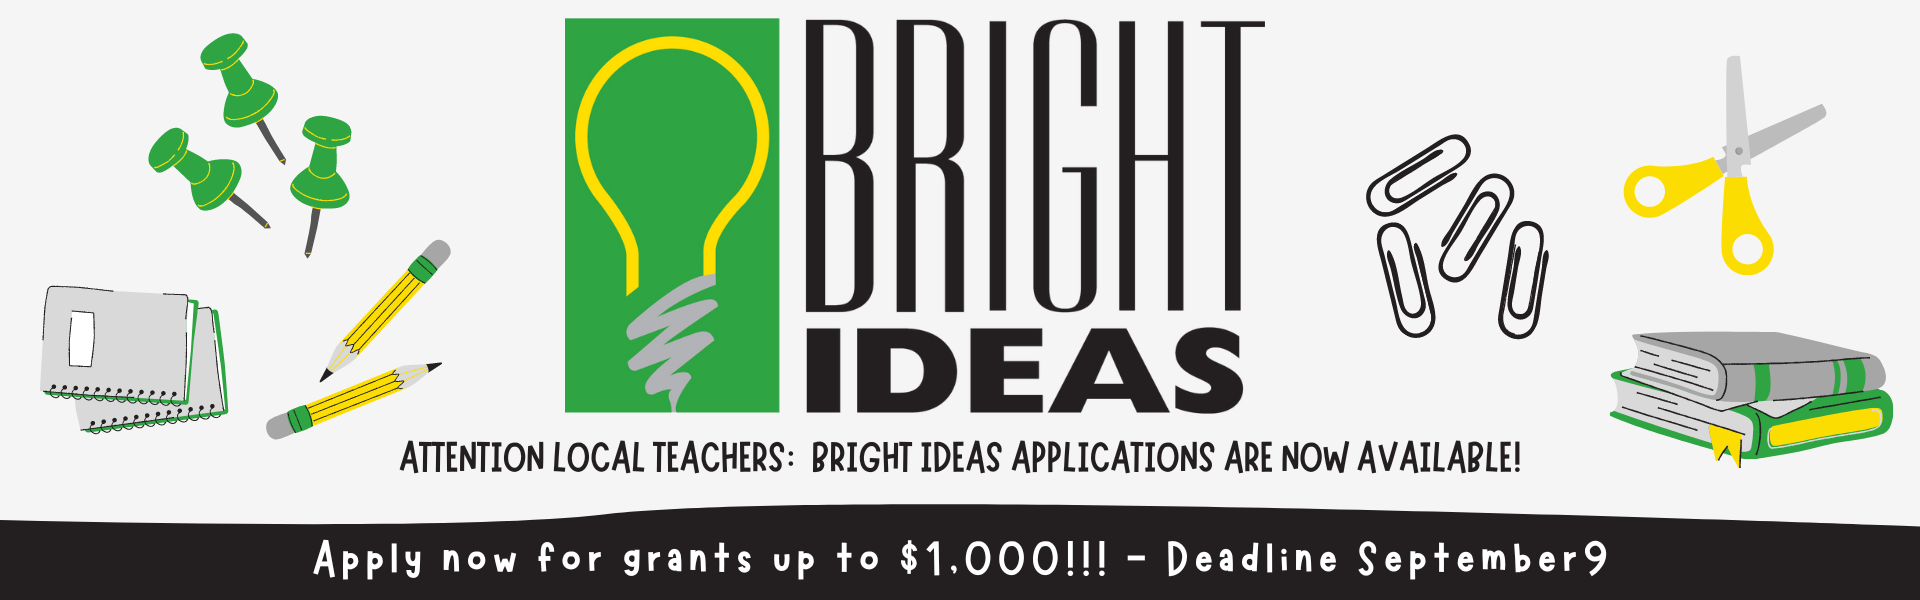 Bright Ideas Applications